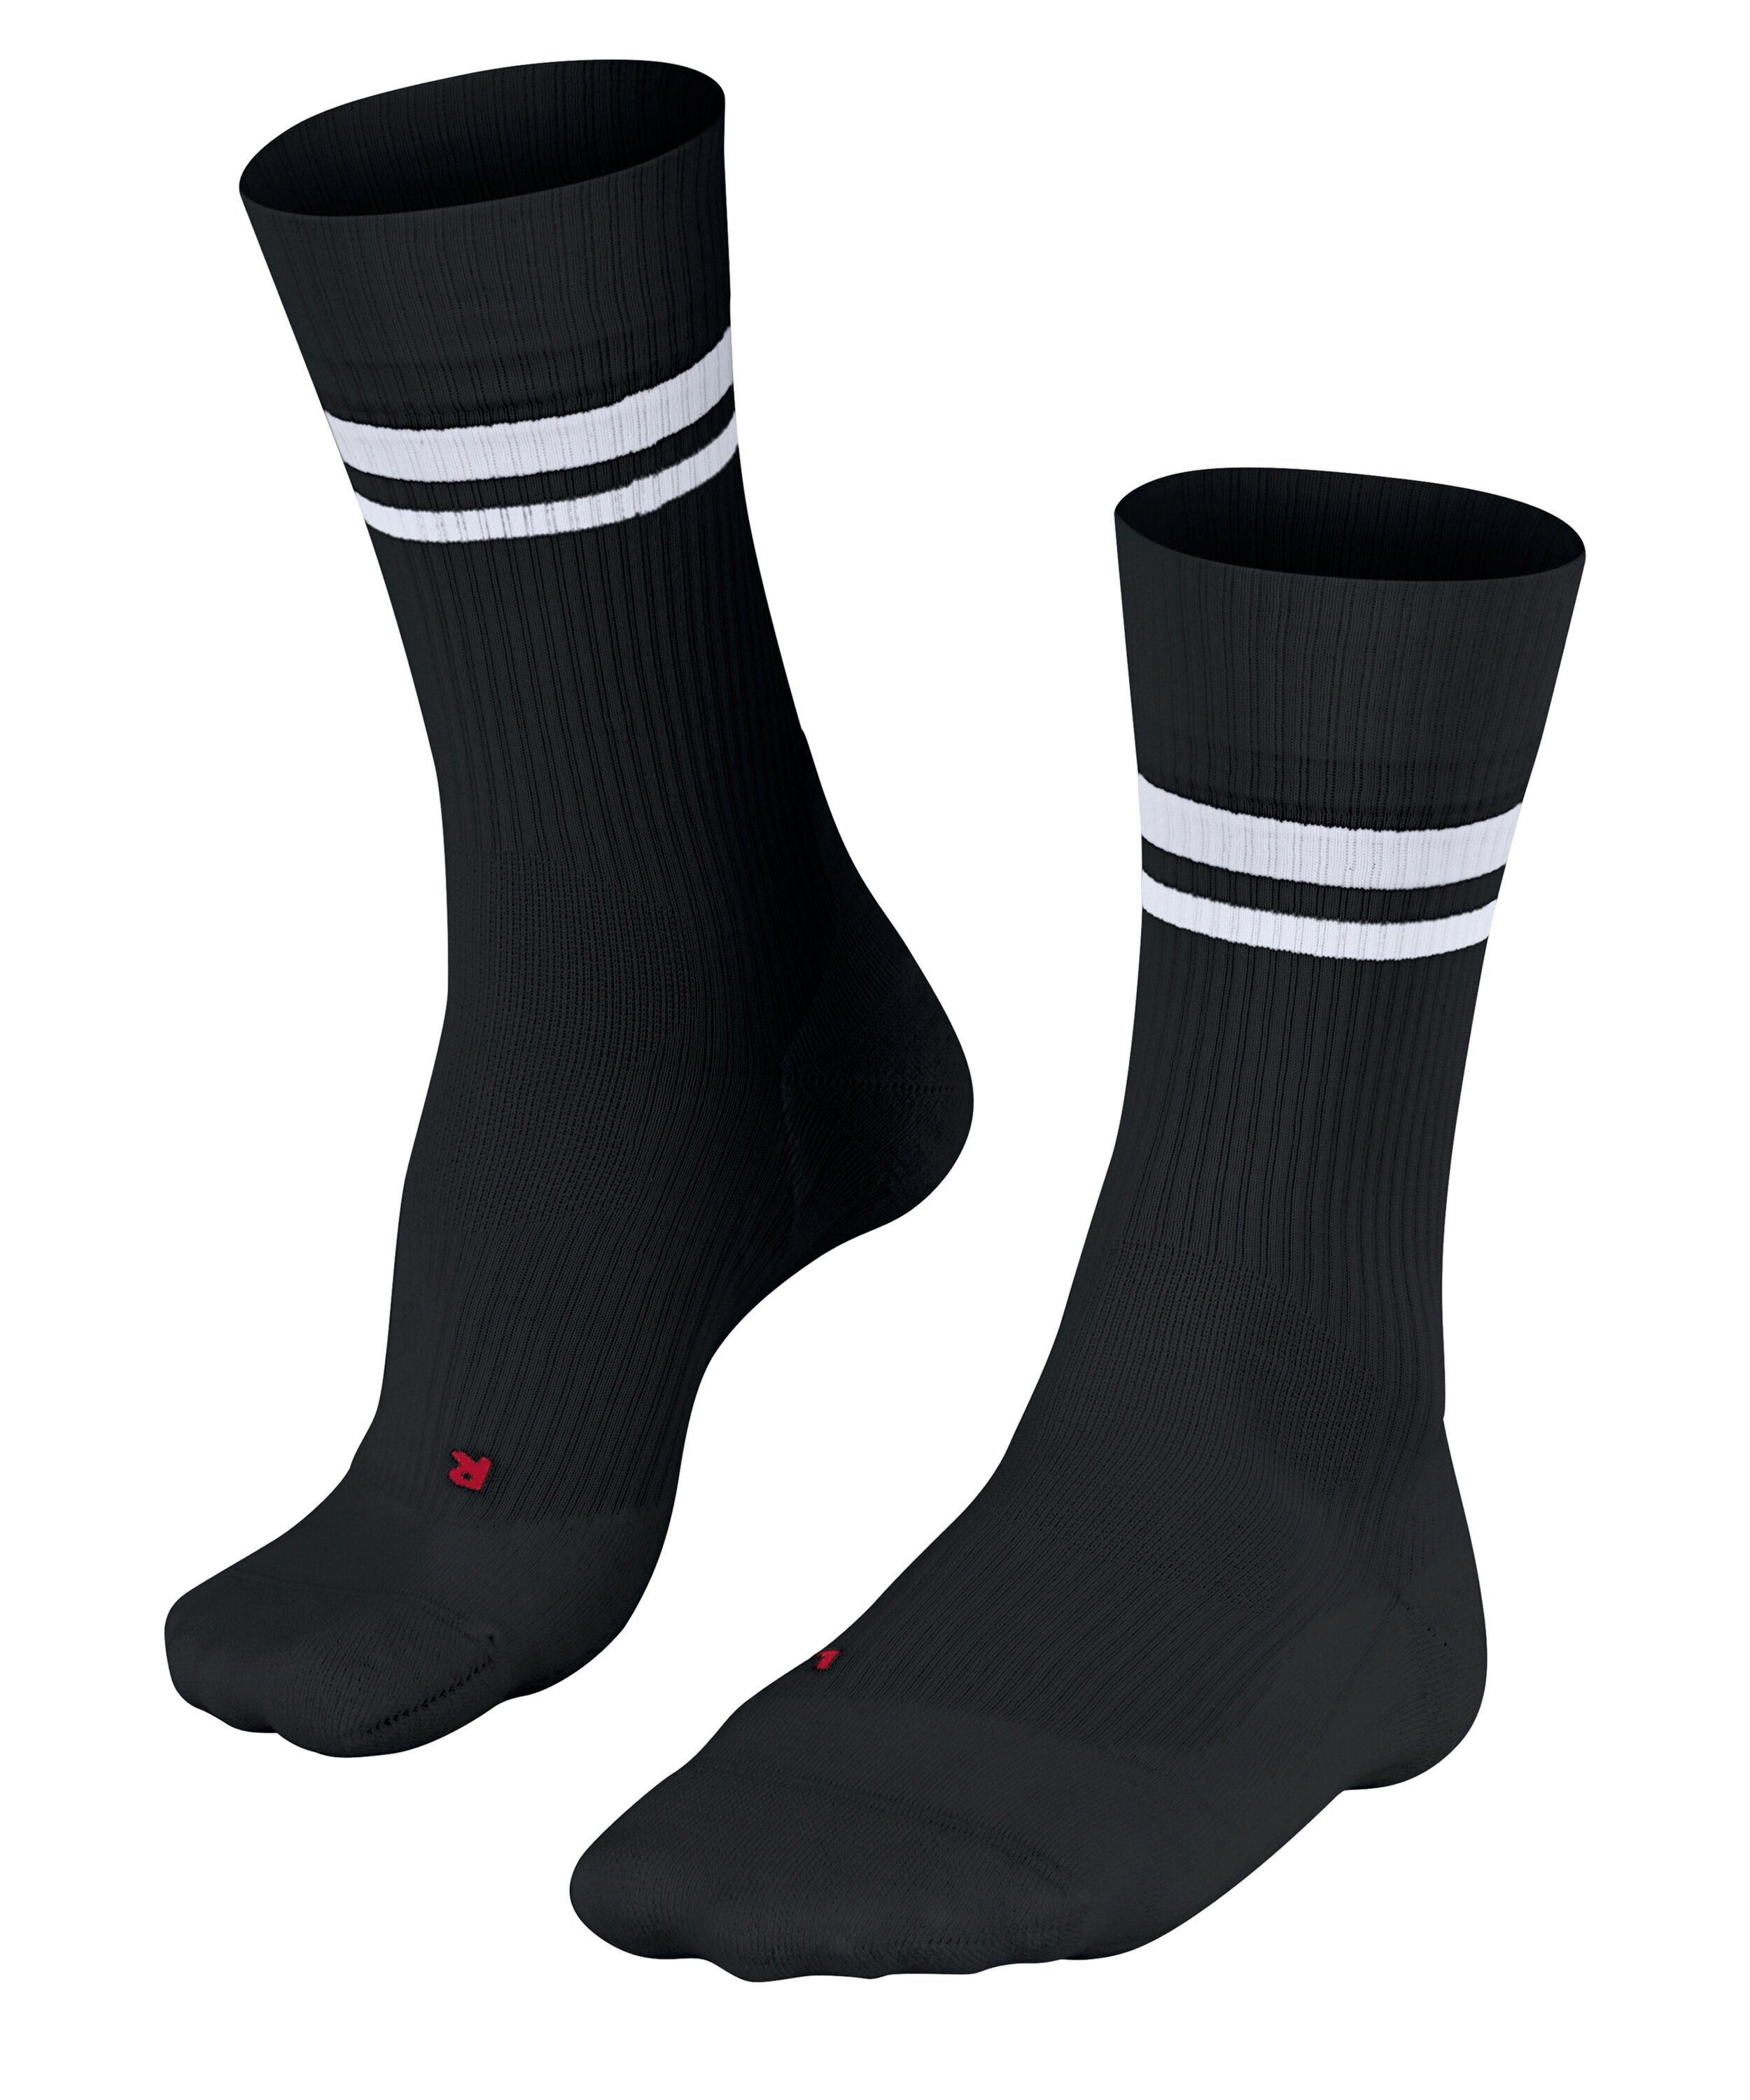 (3002) Sandplätze TE4 Stabilisierende FALKE Tennissocken für Socken Women black (1-Paar) Classic